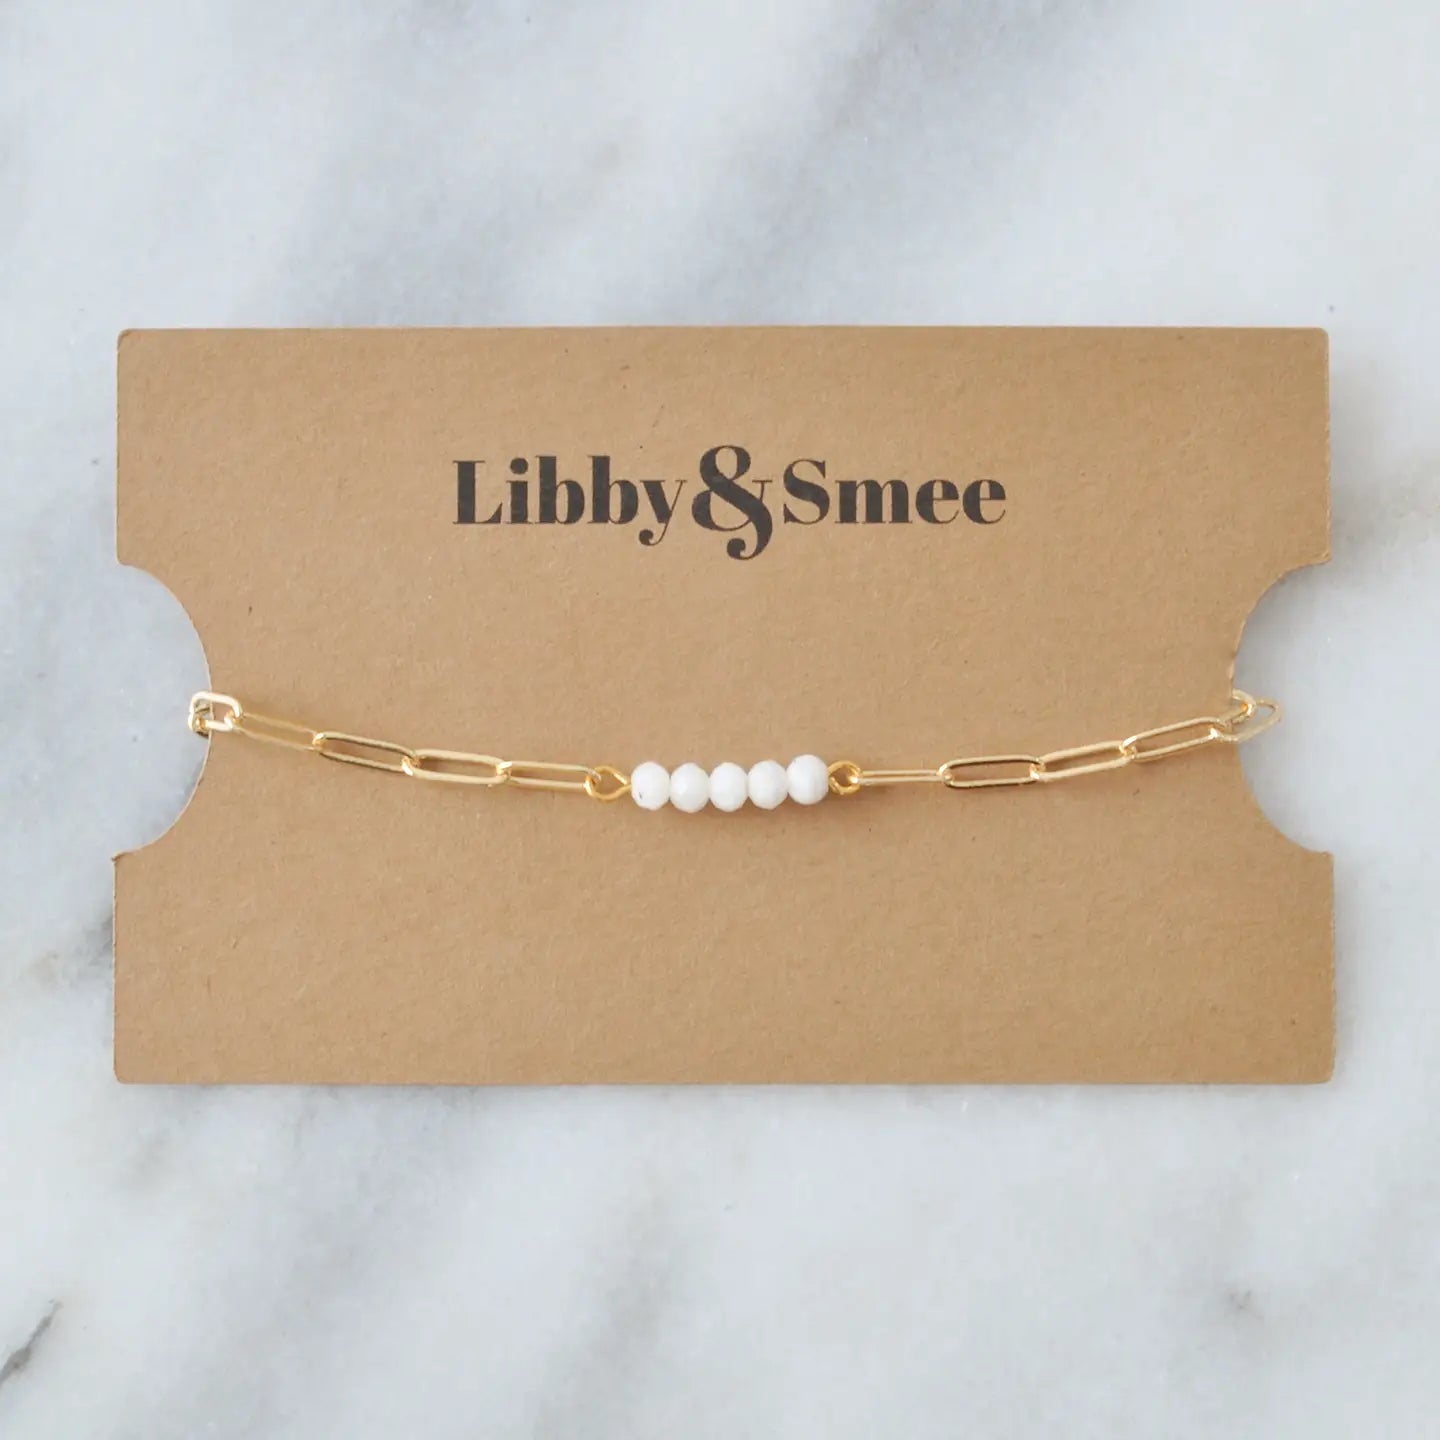 Libby & Smee Gemstone Paper Clip Chain Link Bracelet - Moonstone